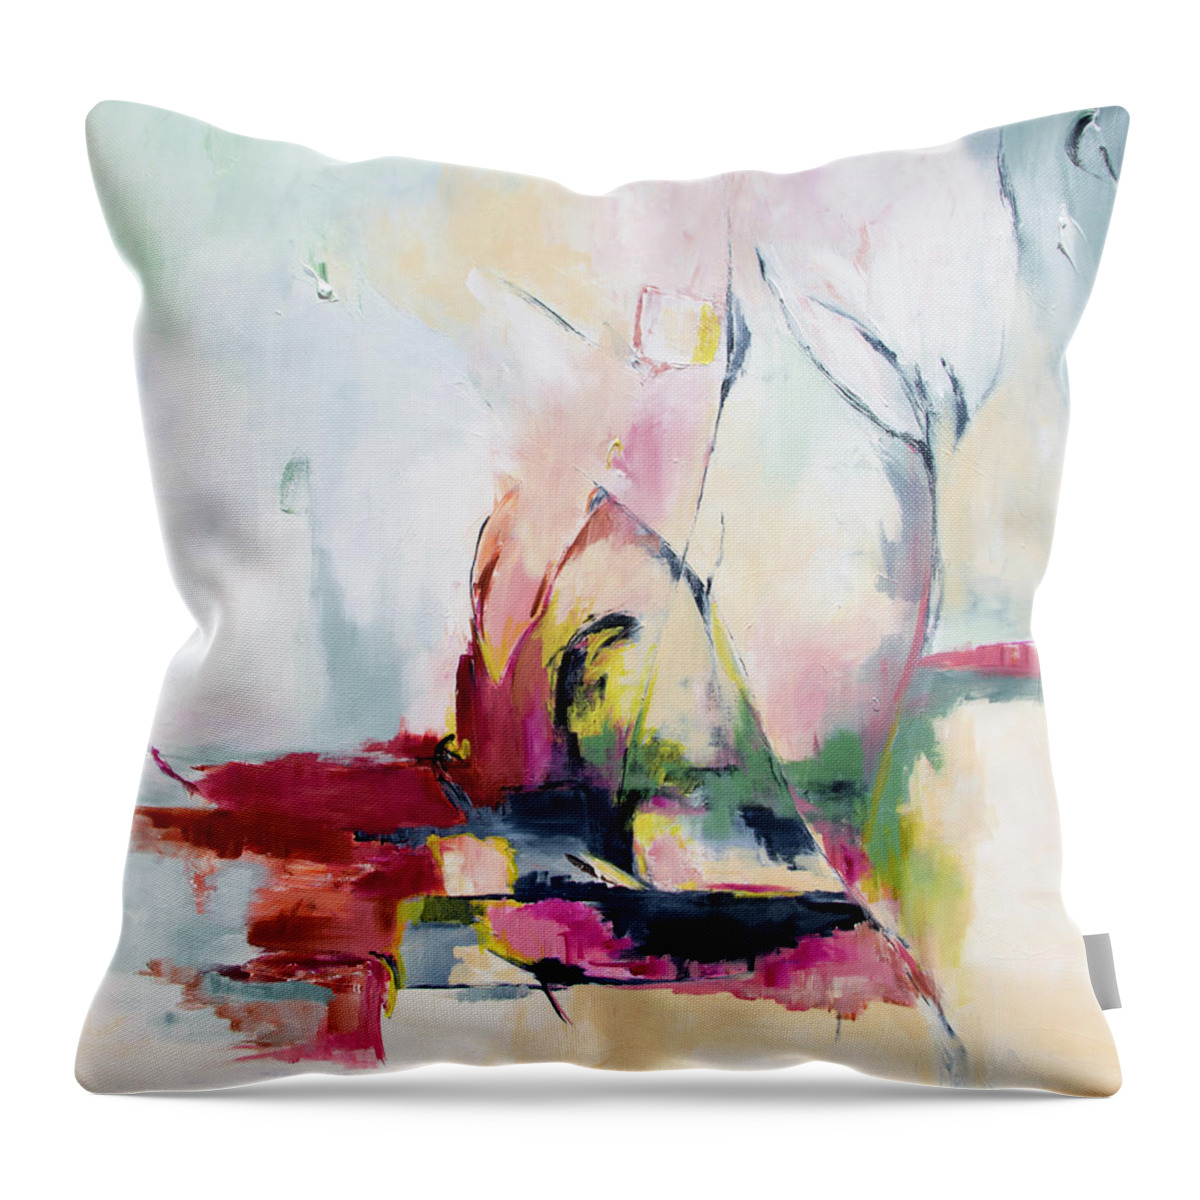 Pink Throw Pillow featuring the painting Prayer by Katrina Nixon